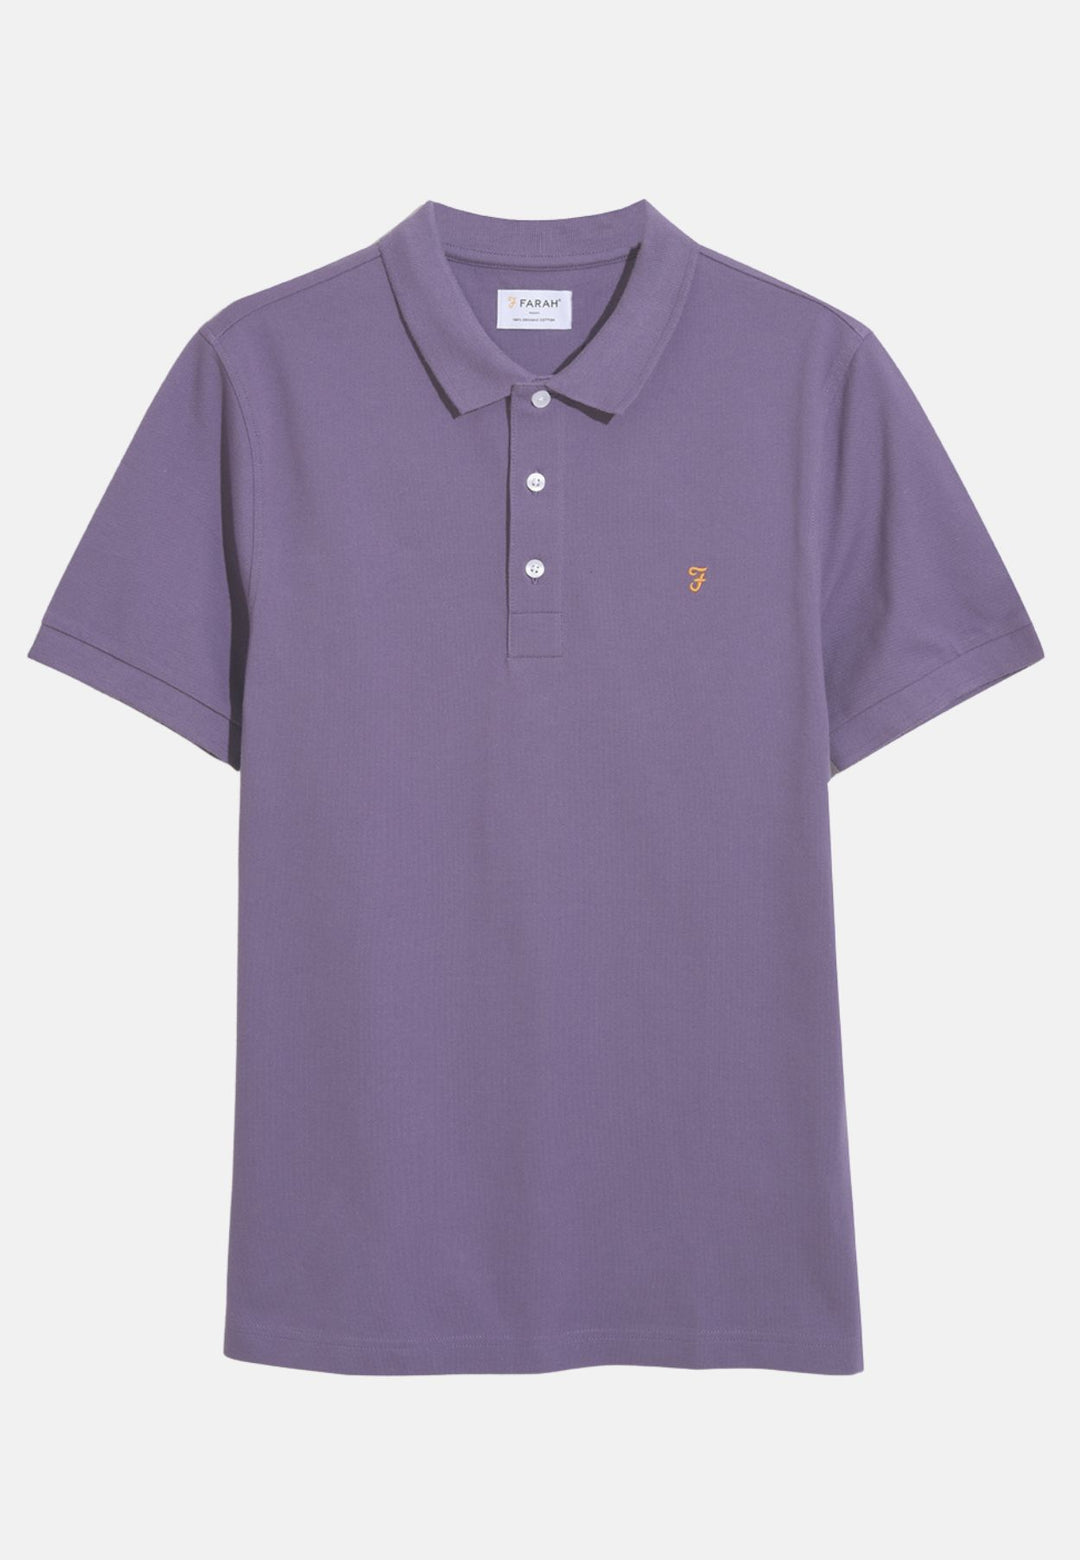 Men's Farah Blanes Polo Shirt in Purple